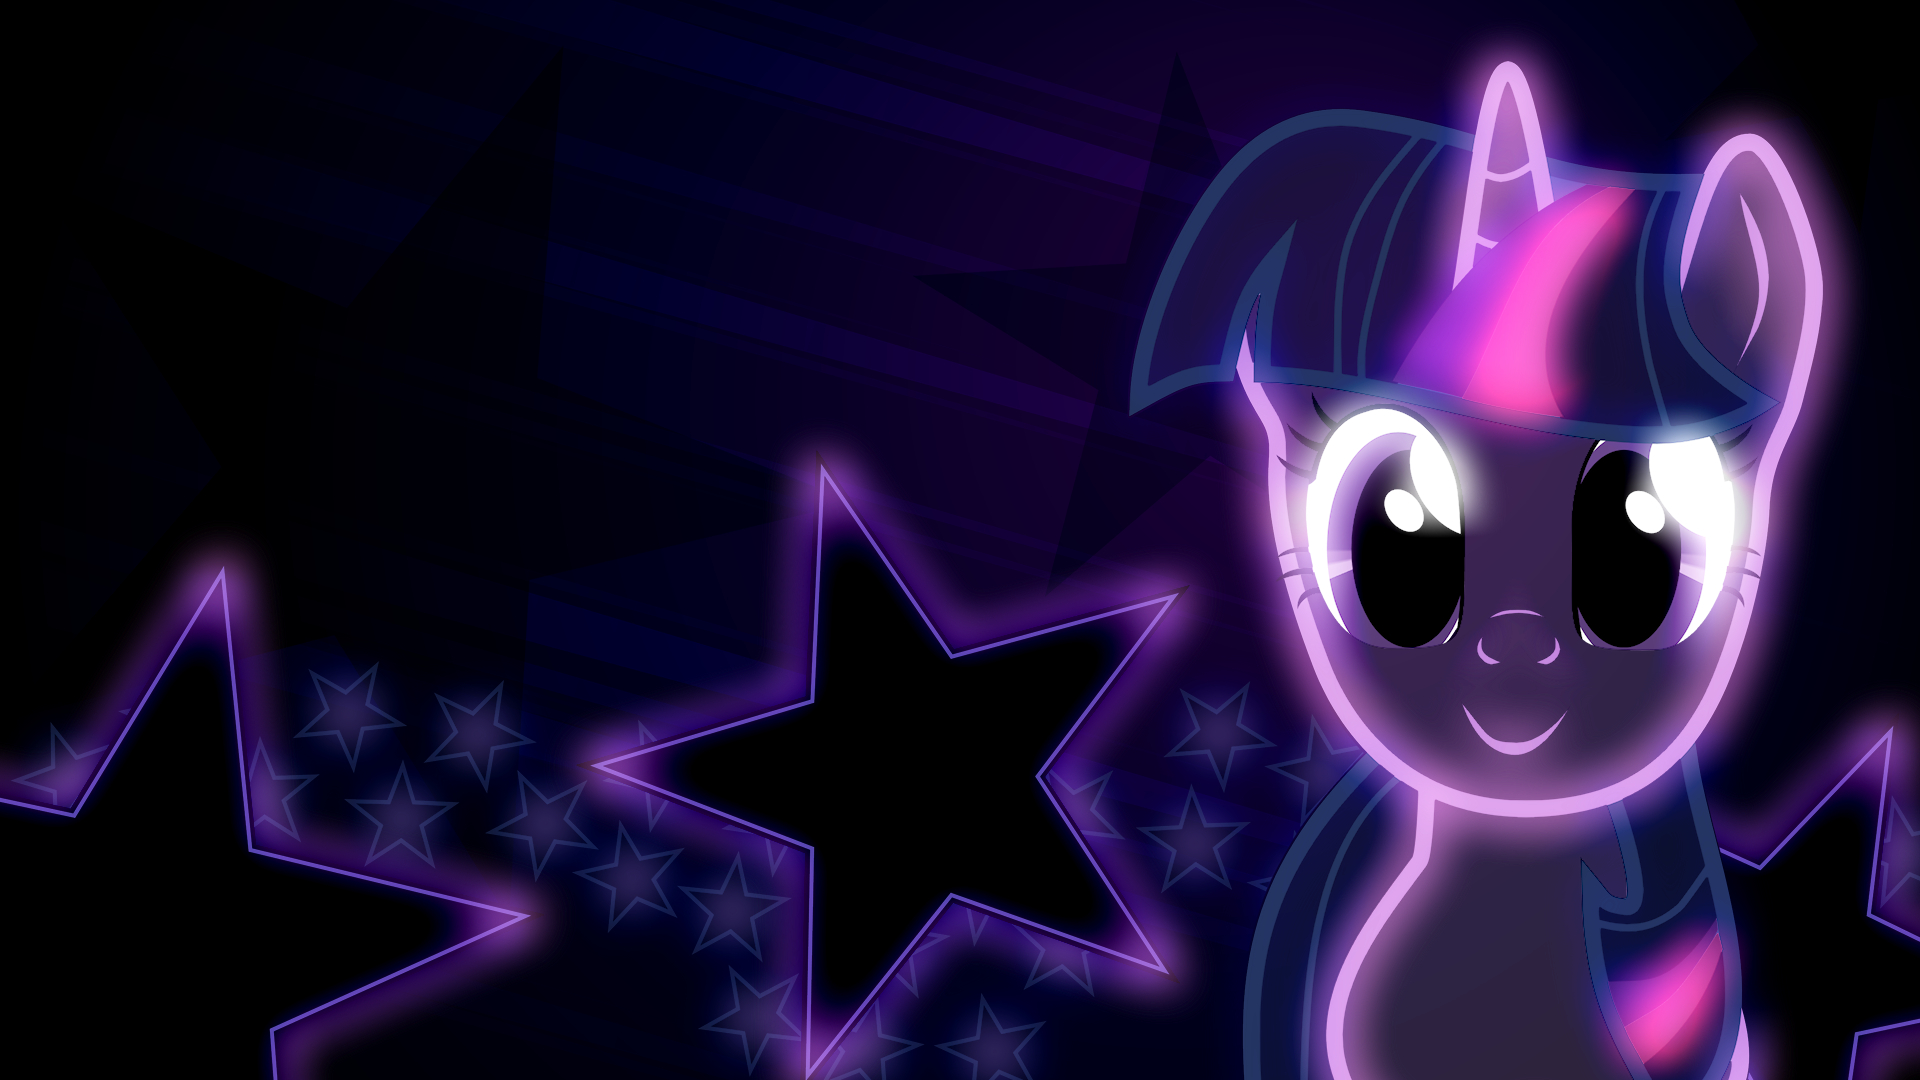 1920x1080 My Little Pony: Friendship is Magic Twilight neon wallpaper | Sparkle wallpaper, Twilight pony, My little pony wallpaper